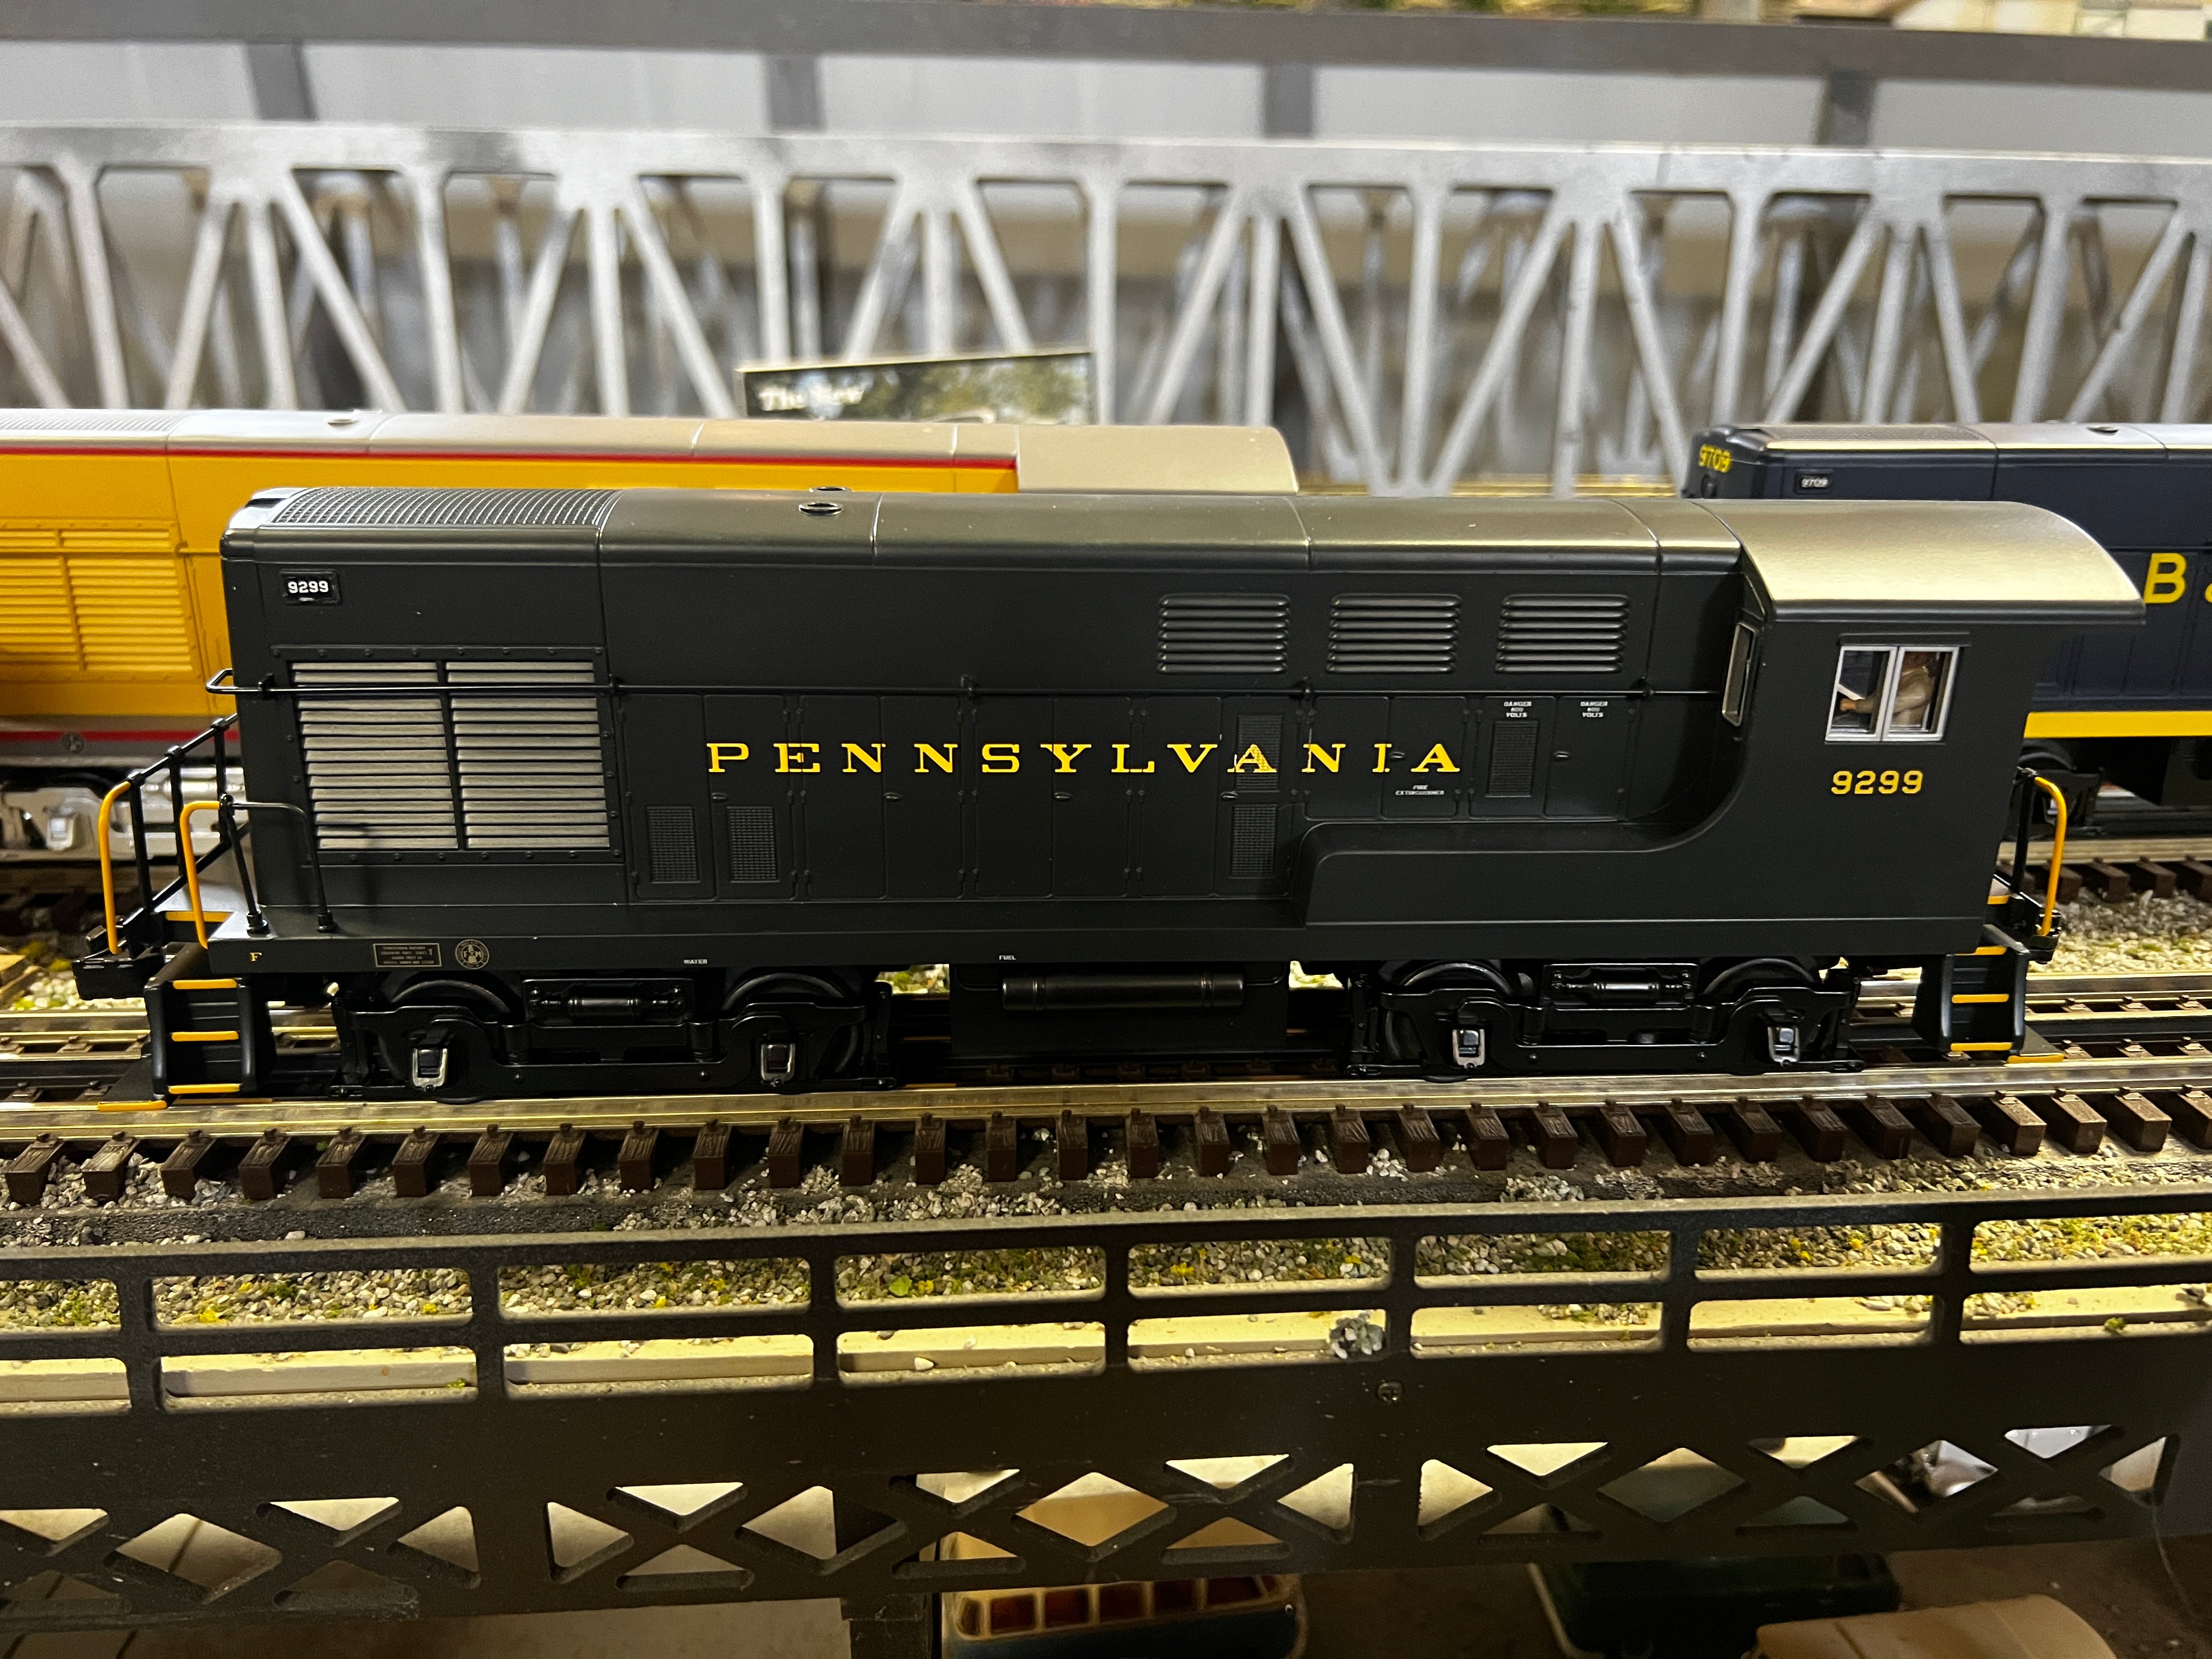 MTH 30-21023-1 - FM H10-44 Diesel Engine "Pennsylvania" #9299 w/ PS3 - Custom Run for MrMuffin'sTrains